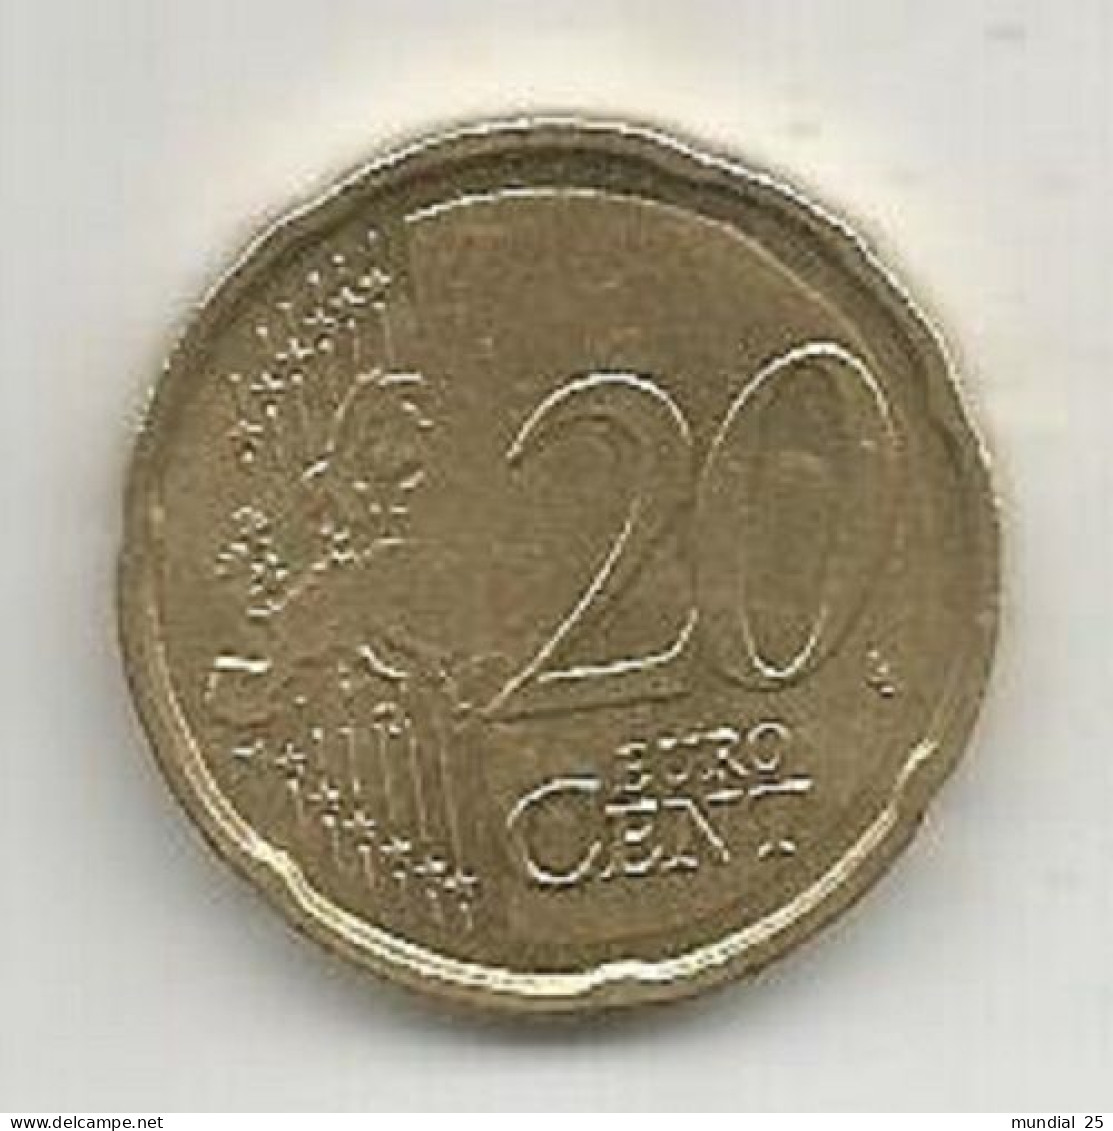 GERMANY 20 EURO CENT 2007 (G) - Duitsland